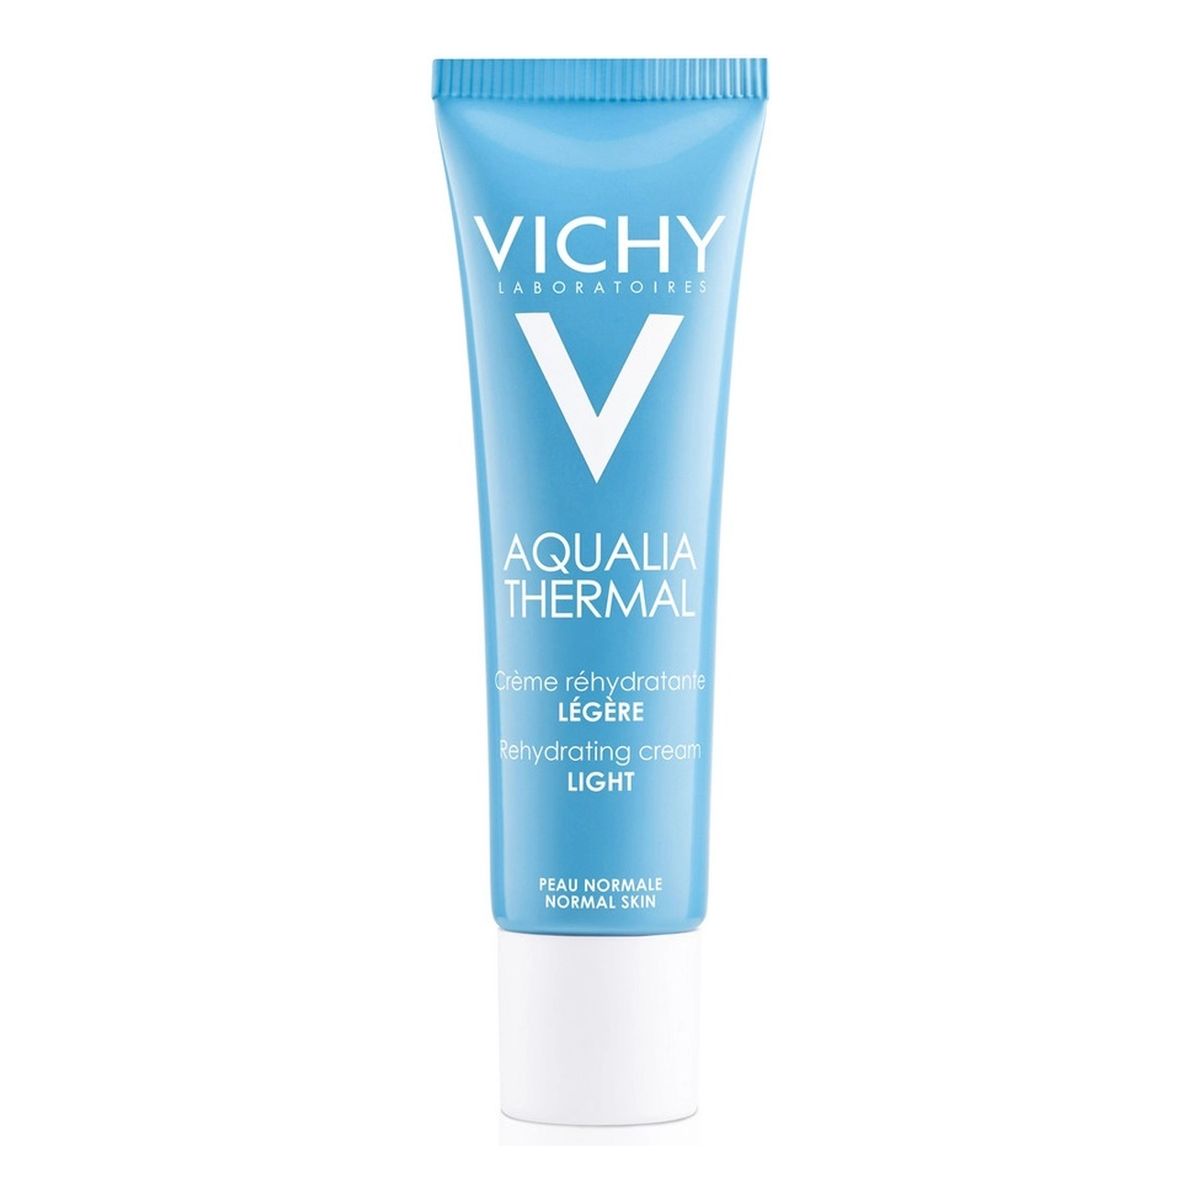 Vichy Aqualia Thermal lekki Krem nawilżający do skóry normalnej 30ml